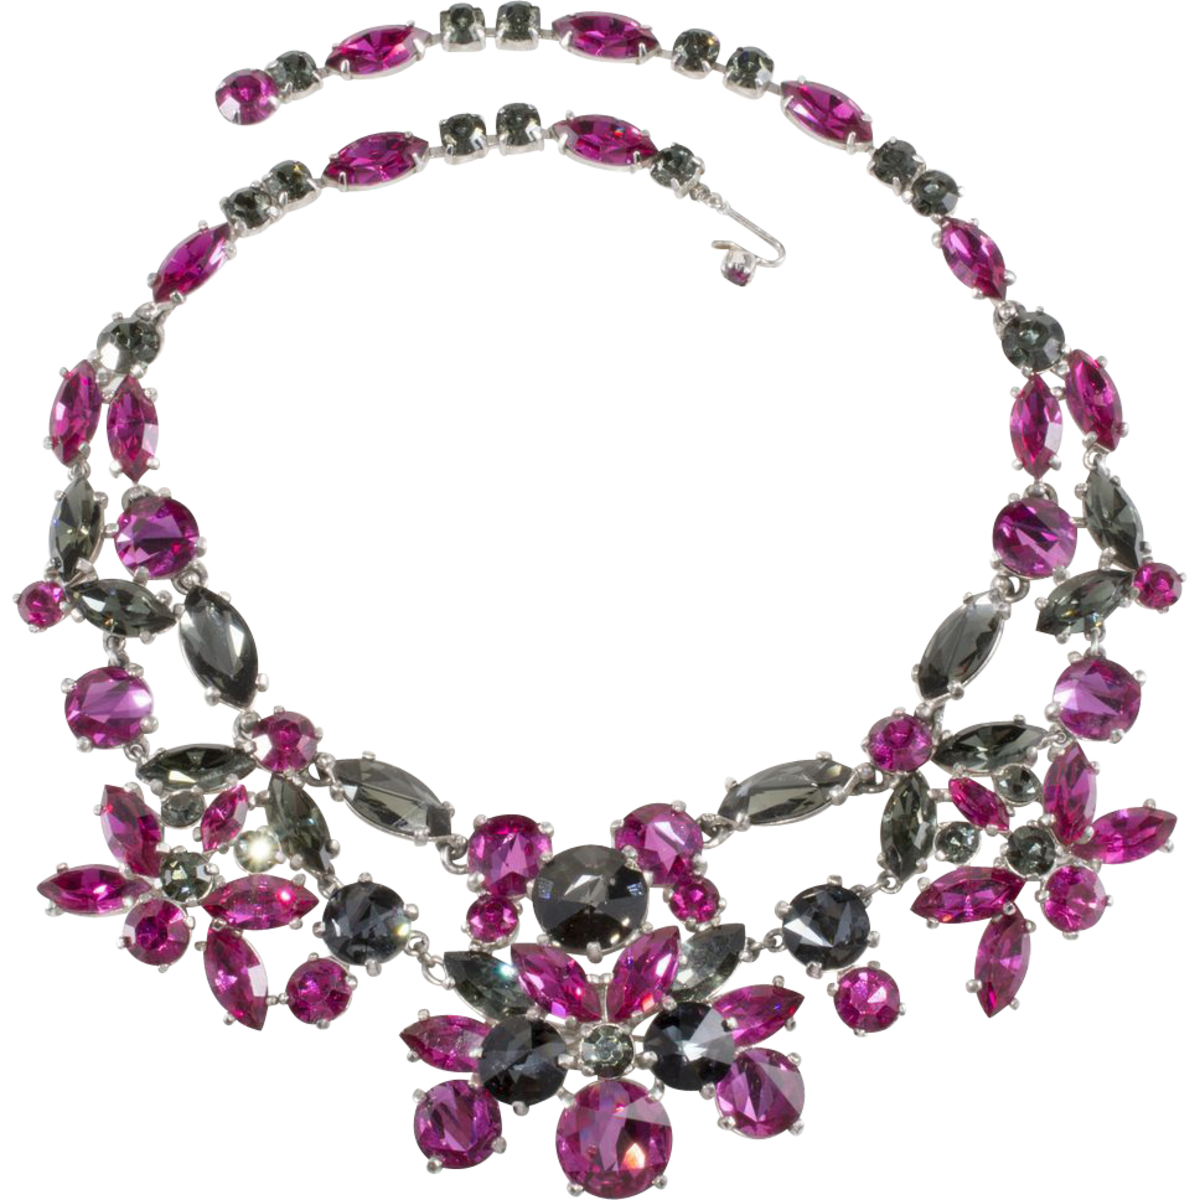 Schiaparelli  rhinestone necklace,  1950s, $350-$450.